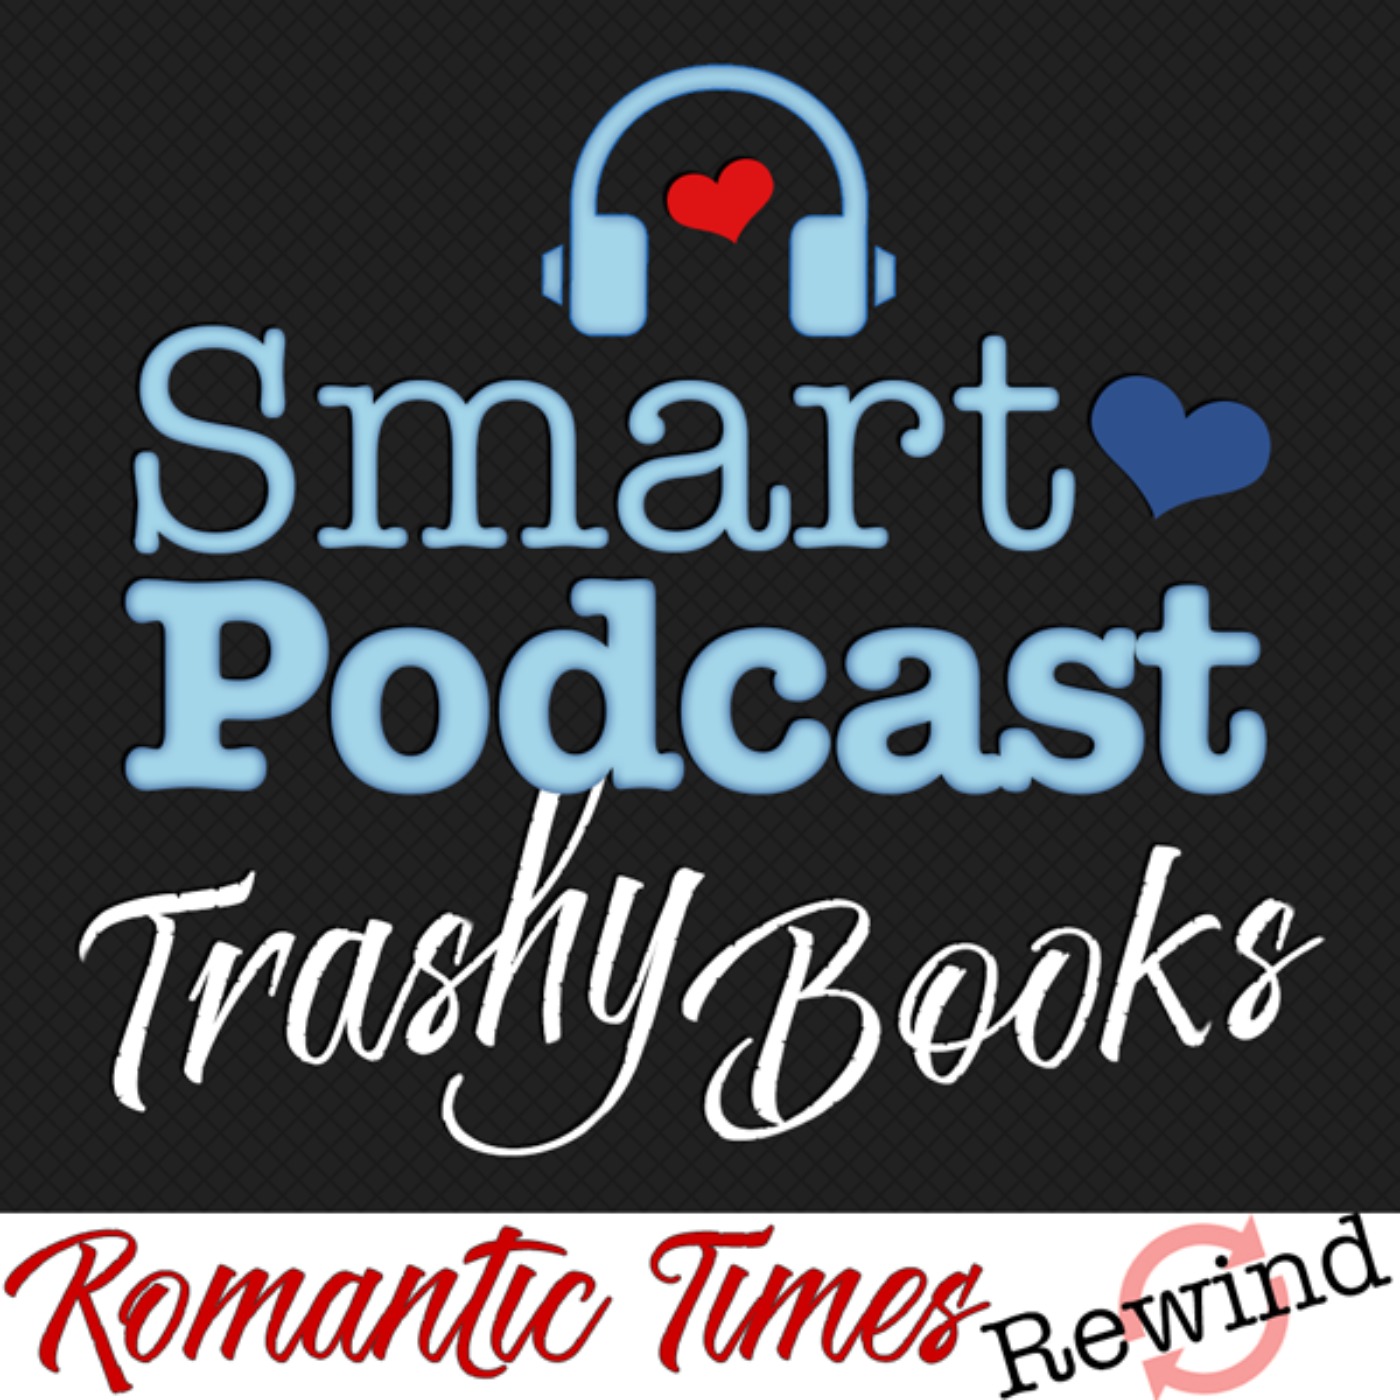 597. Romantic Times Rewind: December 2015 Reviews